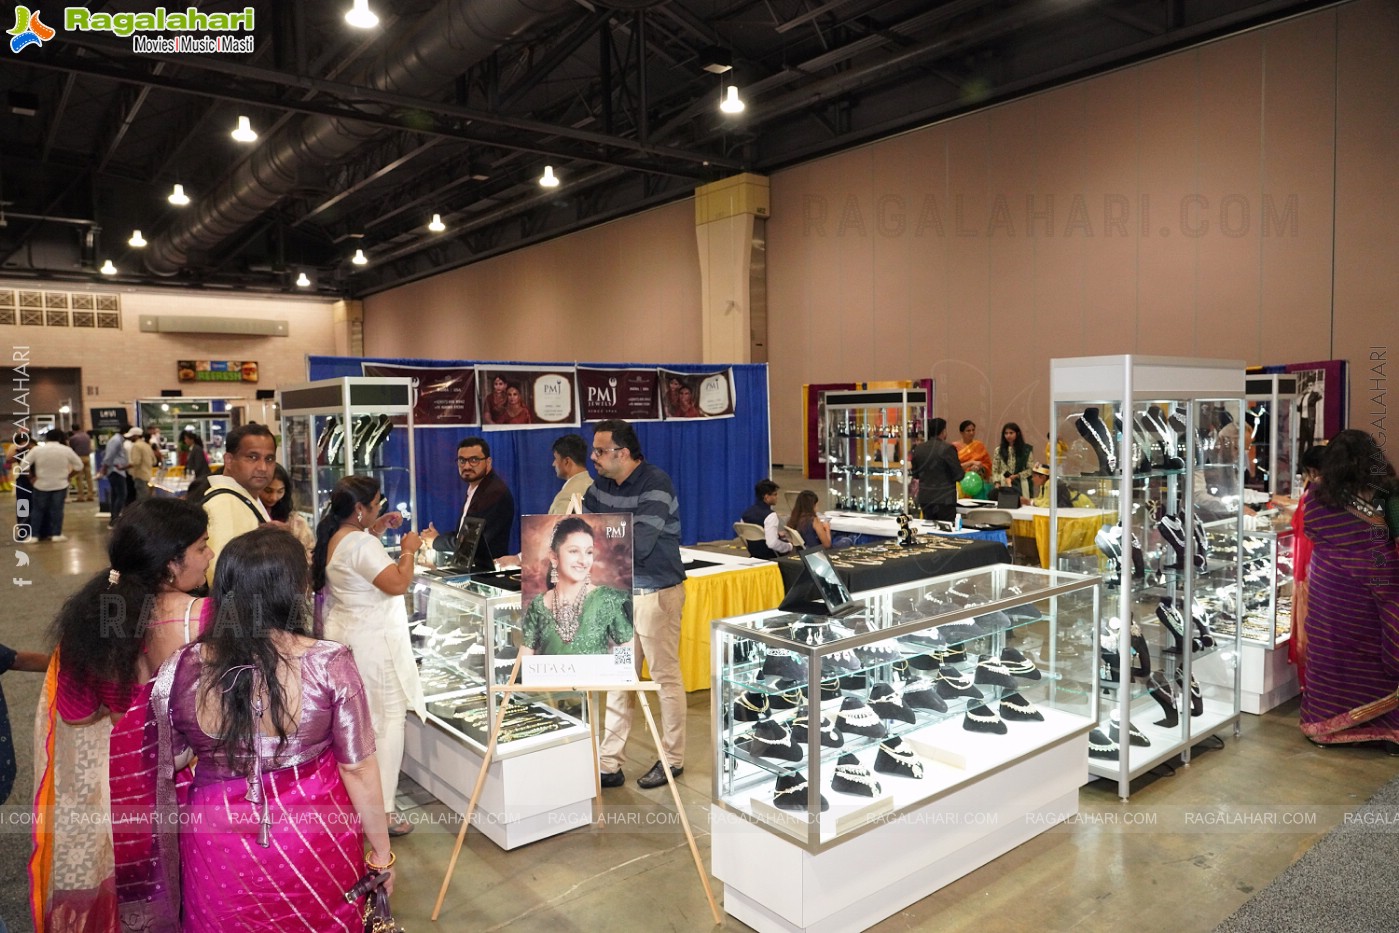 23rd TANA Conference Vendor Exhibits, Philadelphia